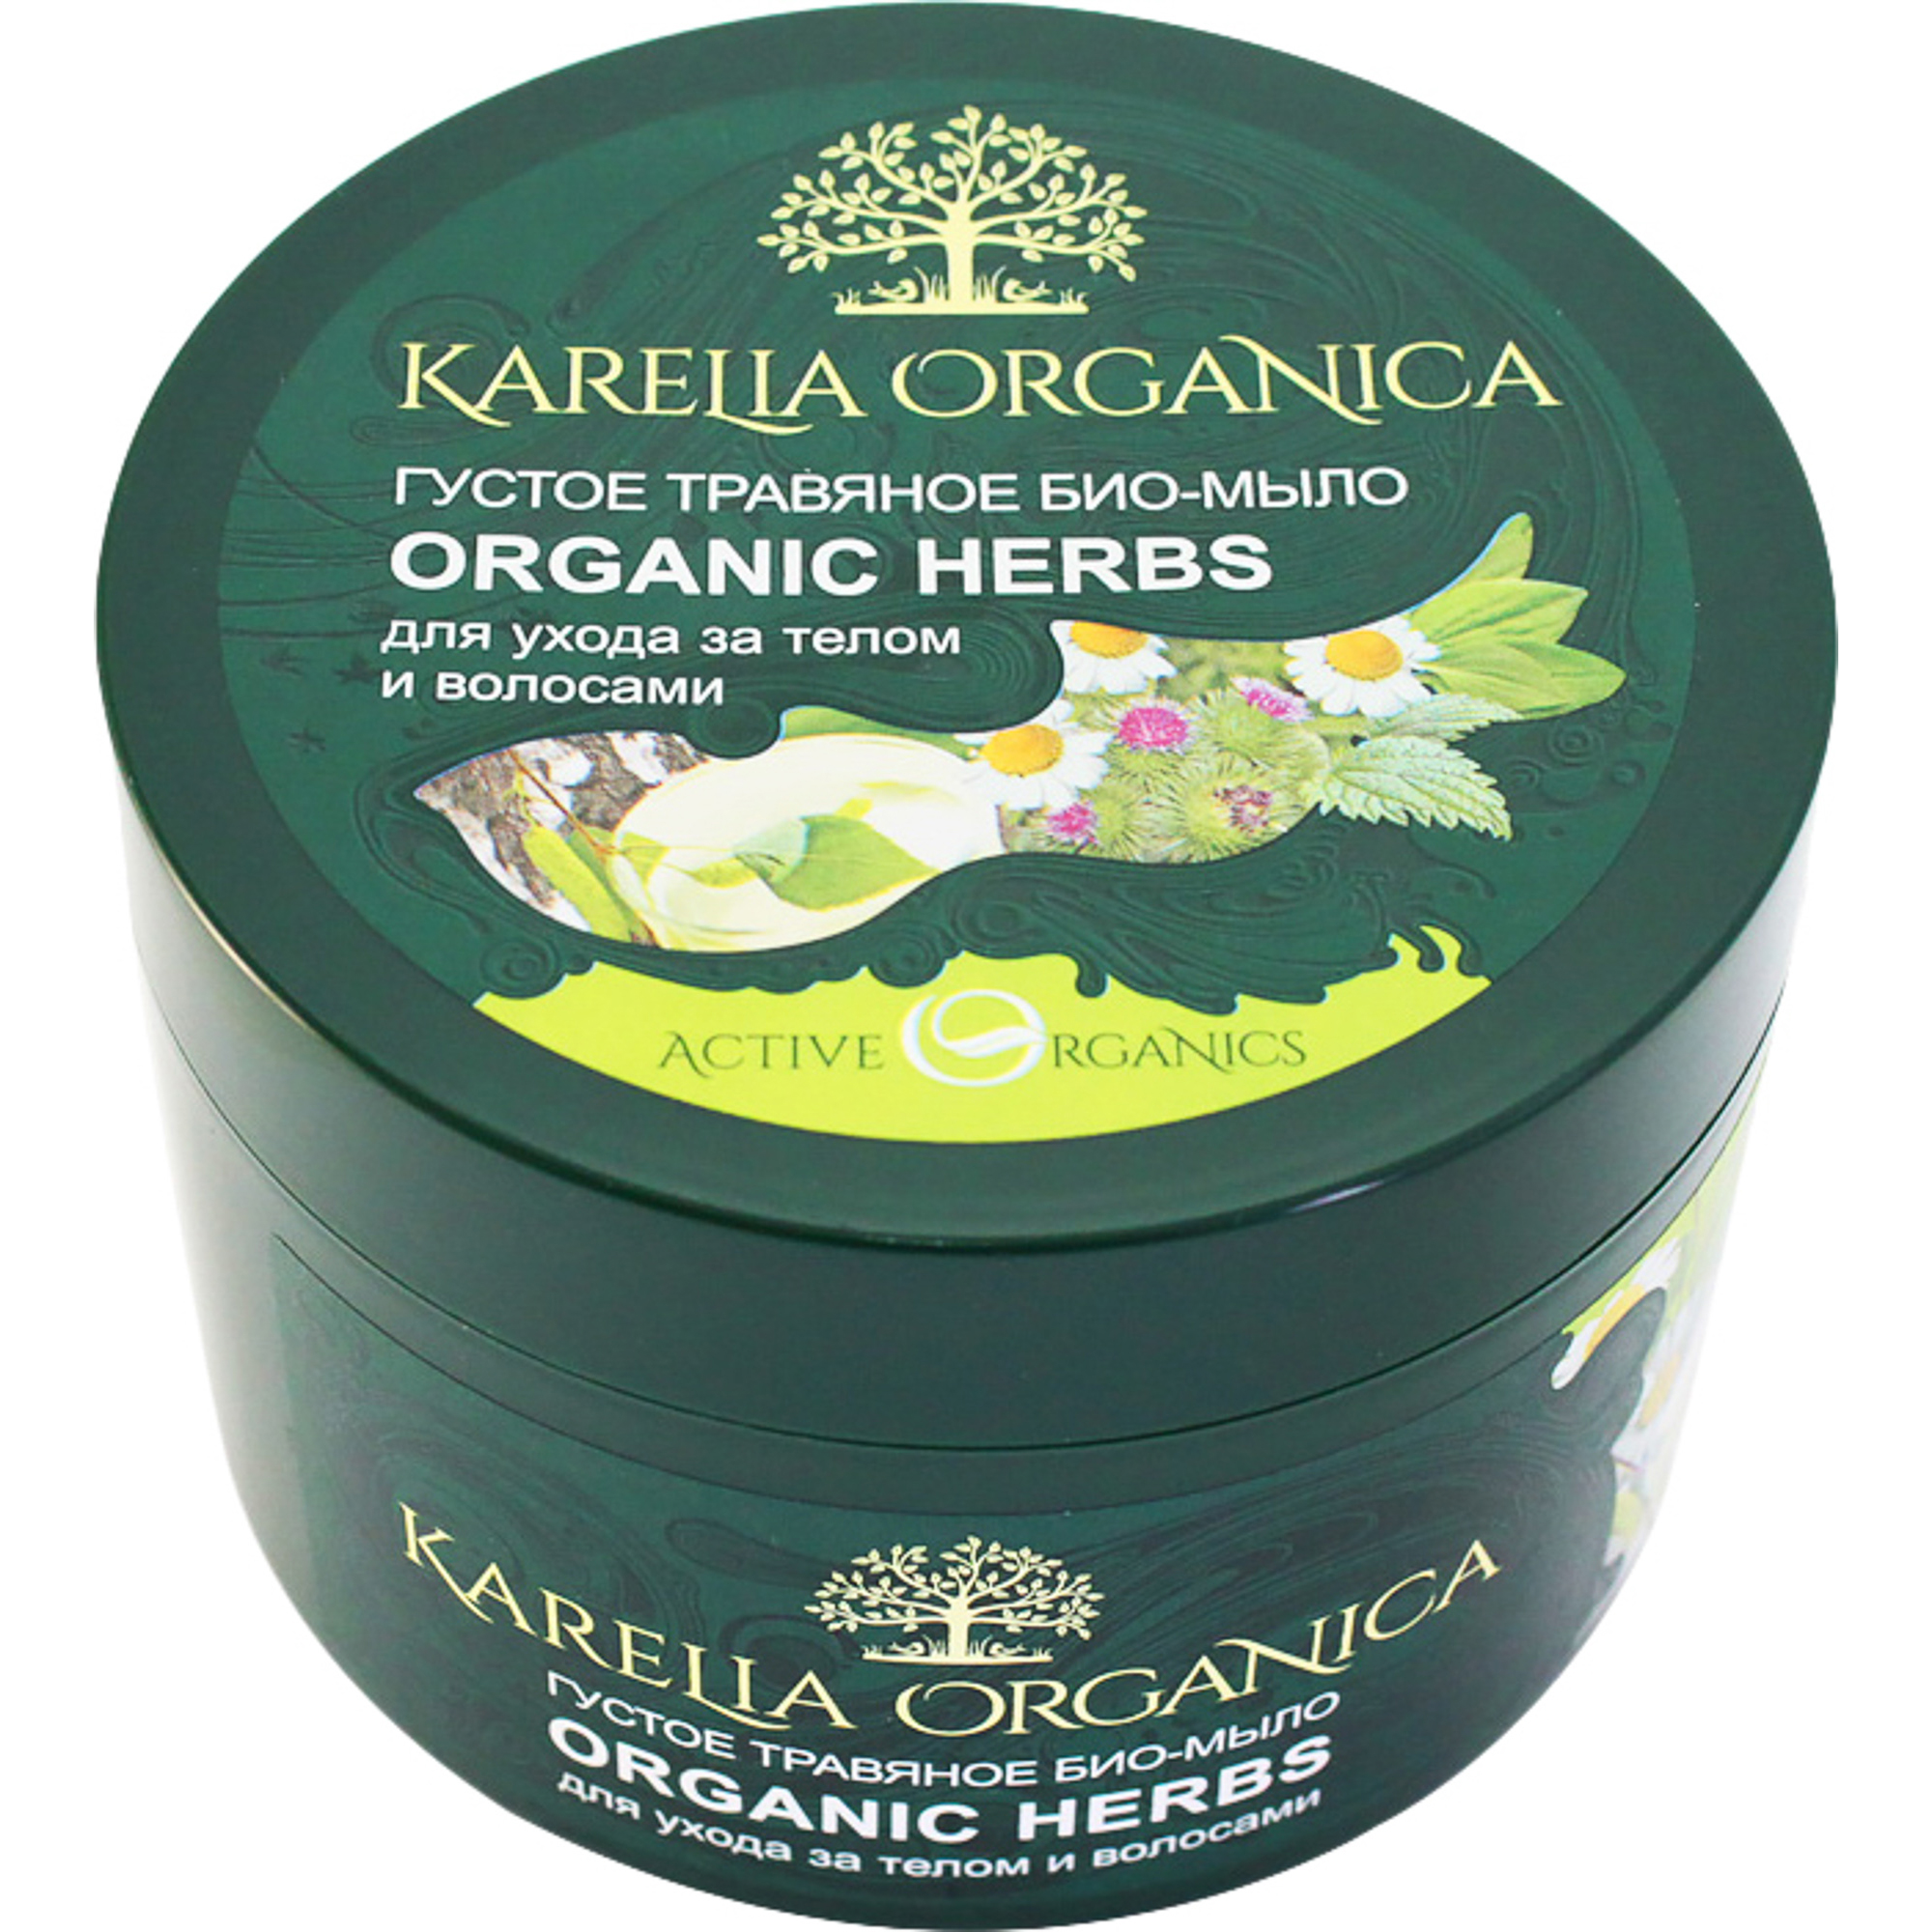 Мыло Фратти НВ Karelia Organica Organic Herbs густое 500 г, размер 8x11x11 см 420701 - фото 2